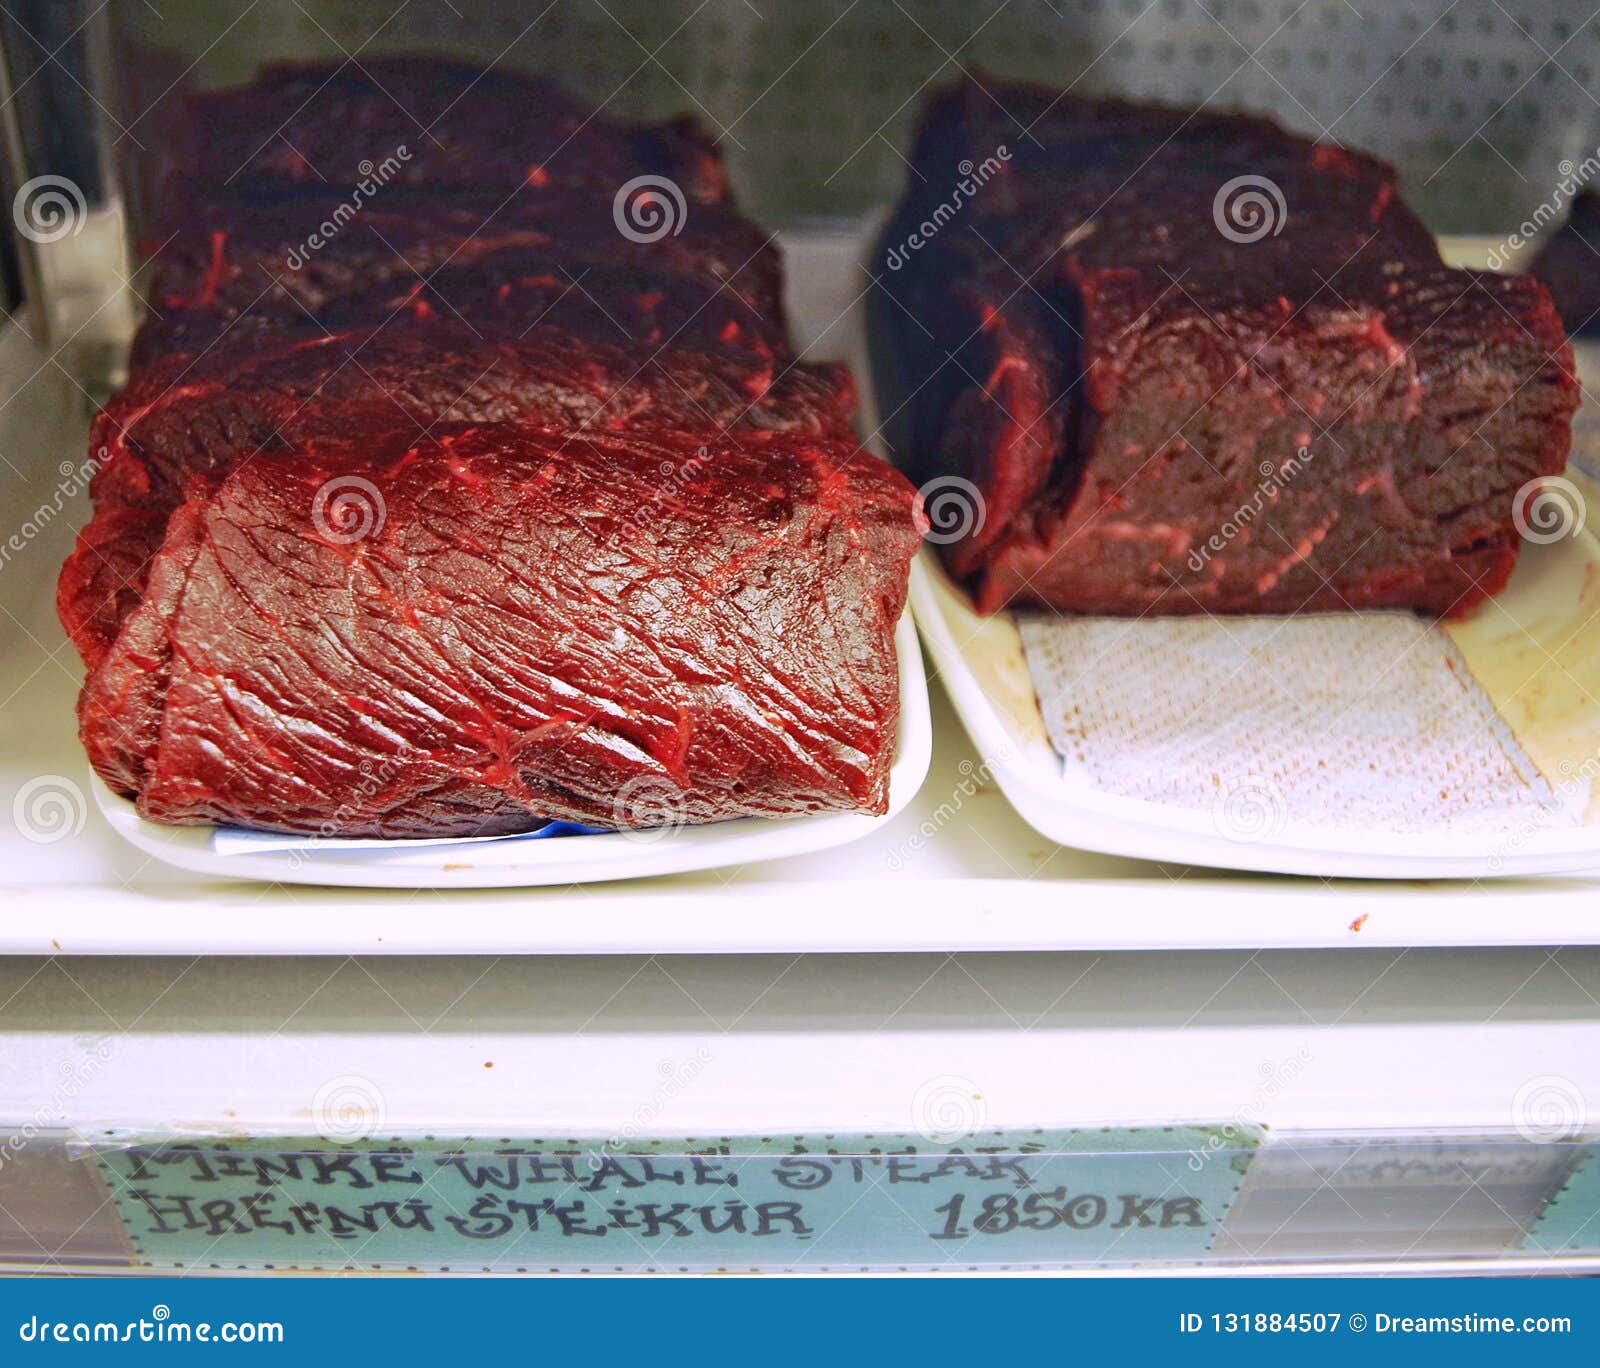 Minke Whale Meat In Reykjavik Iceland Stock Image Image Of Mood